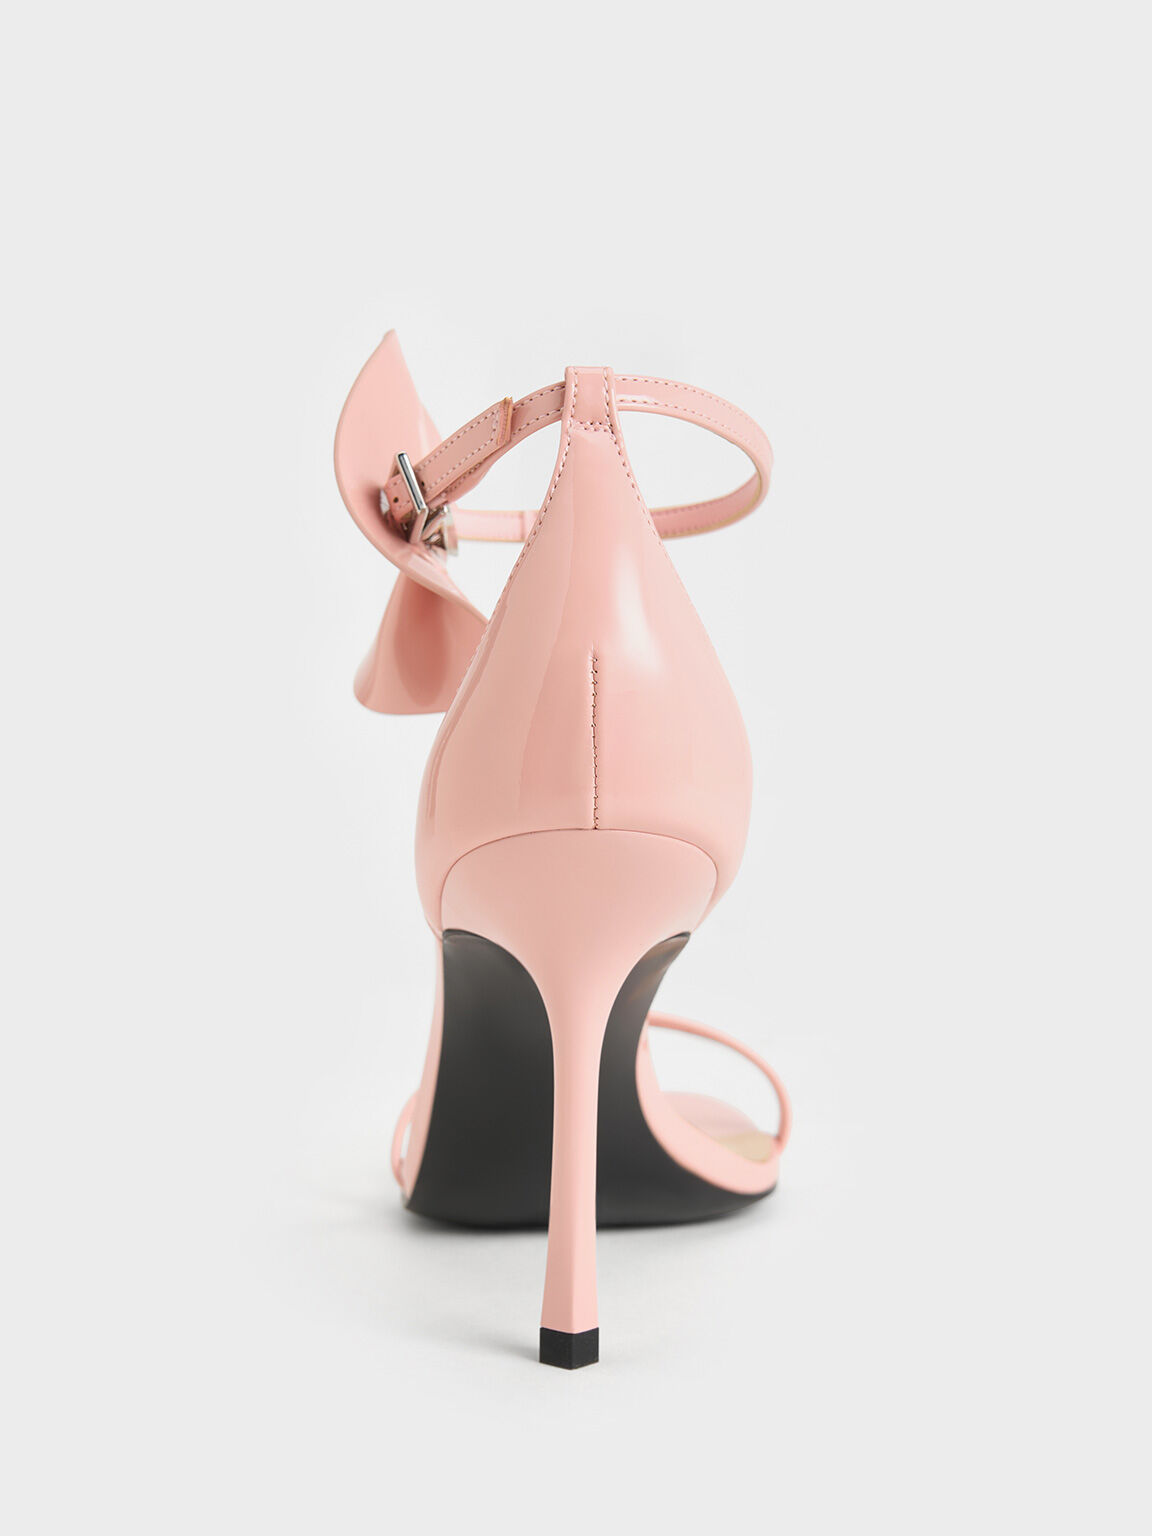 Patent Flower-Accent Stiletto-Heel Sandals, Pink, hi-res